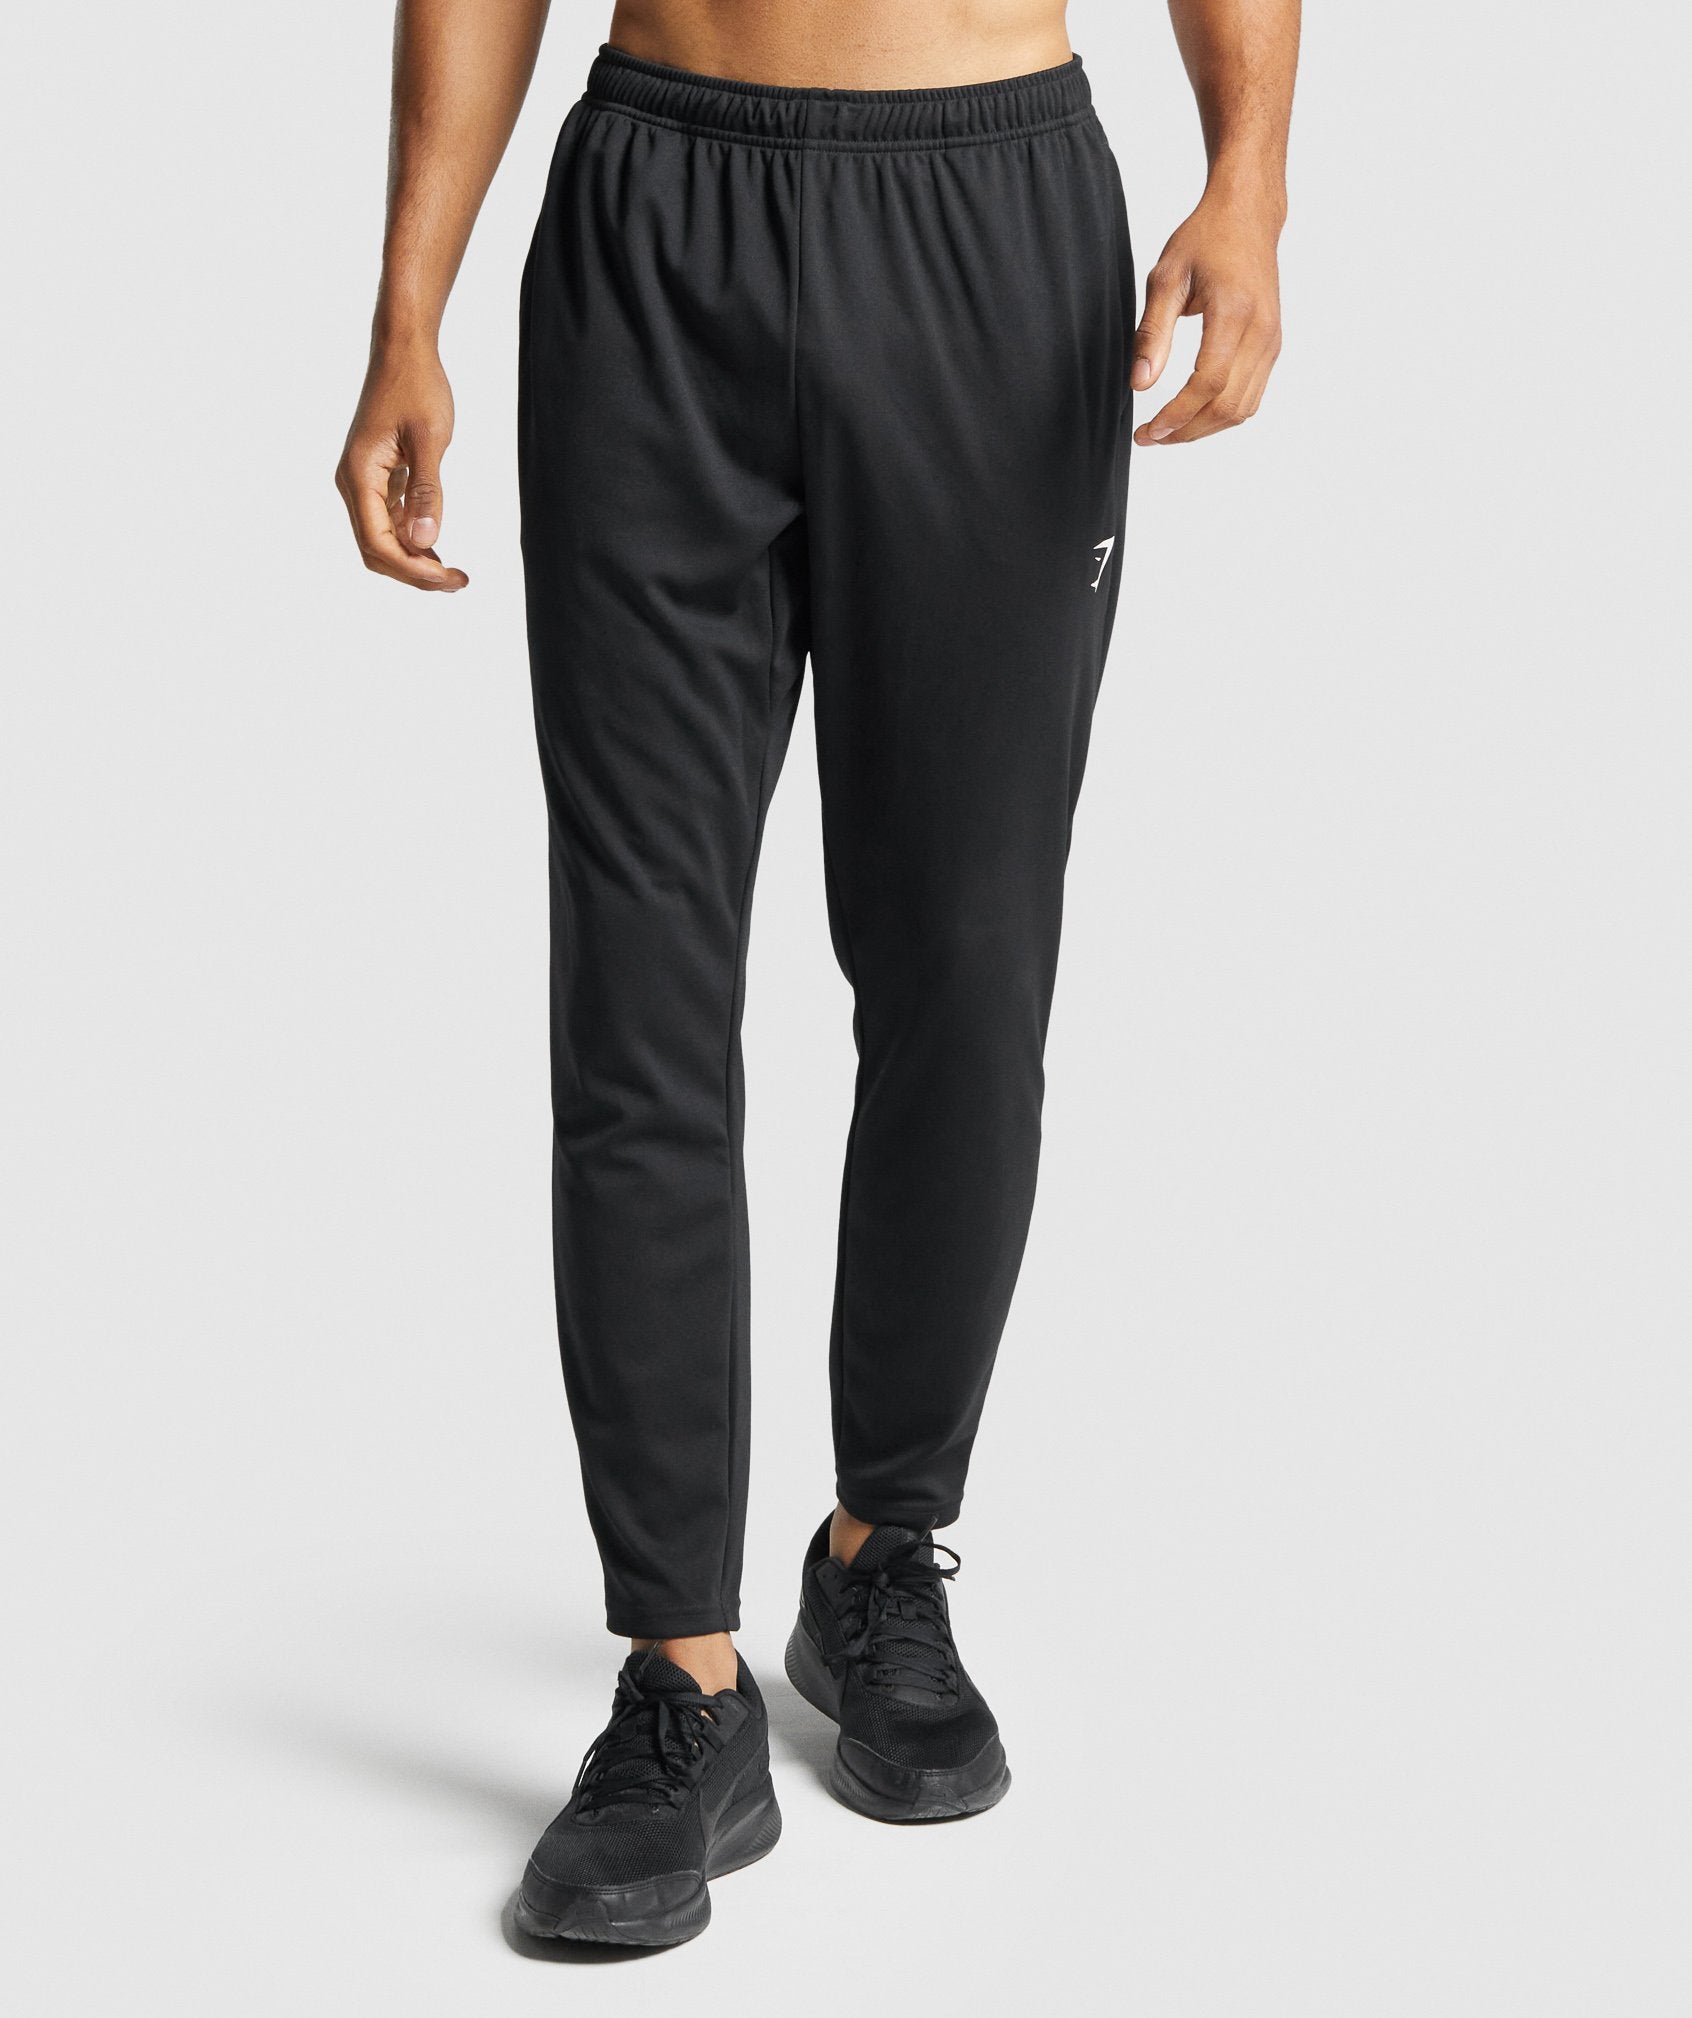 Gymshark, Pants, Mens Gymshark Black Sweatpants Size Medium